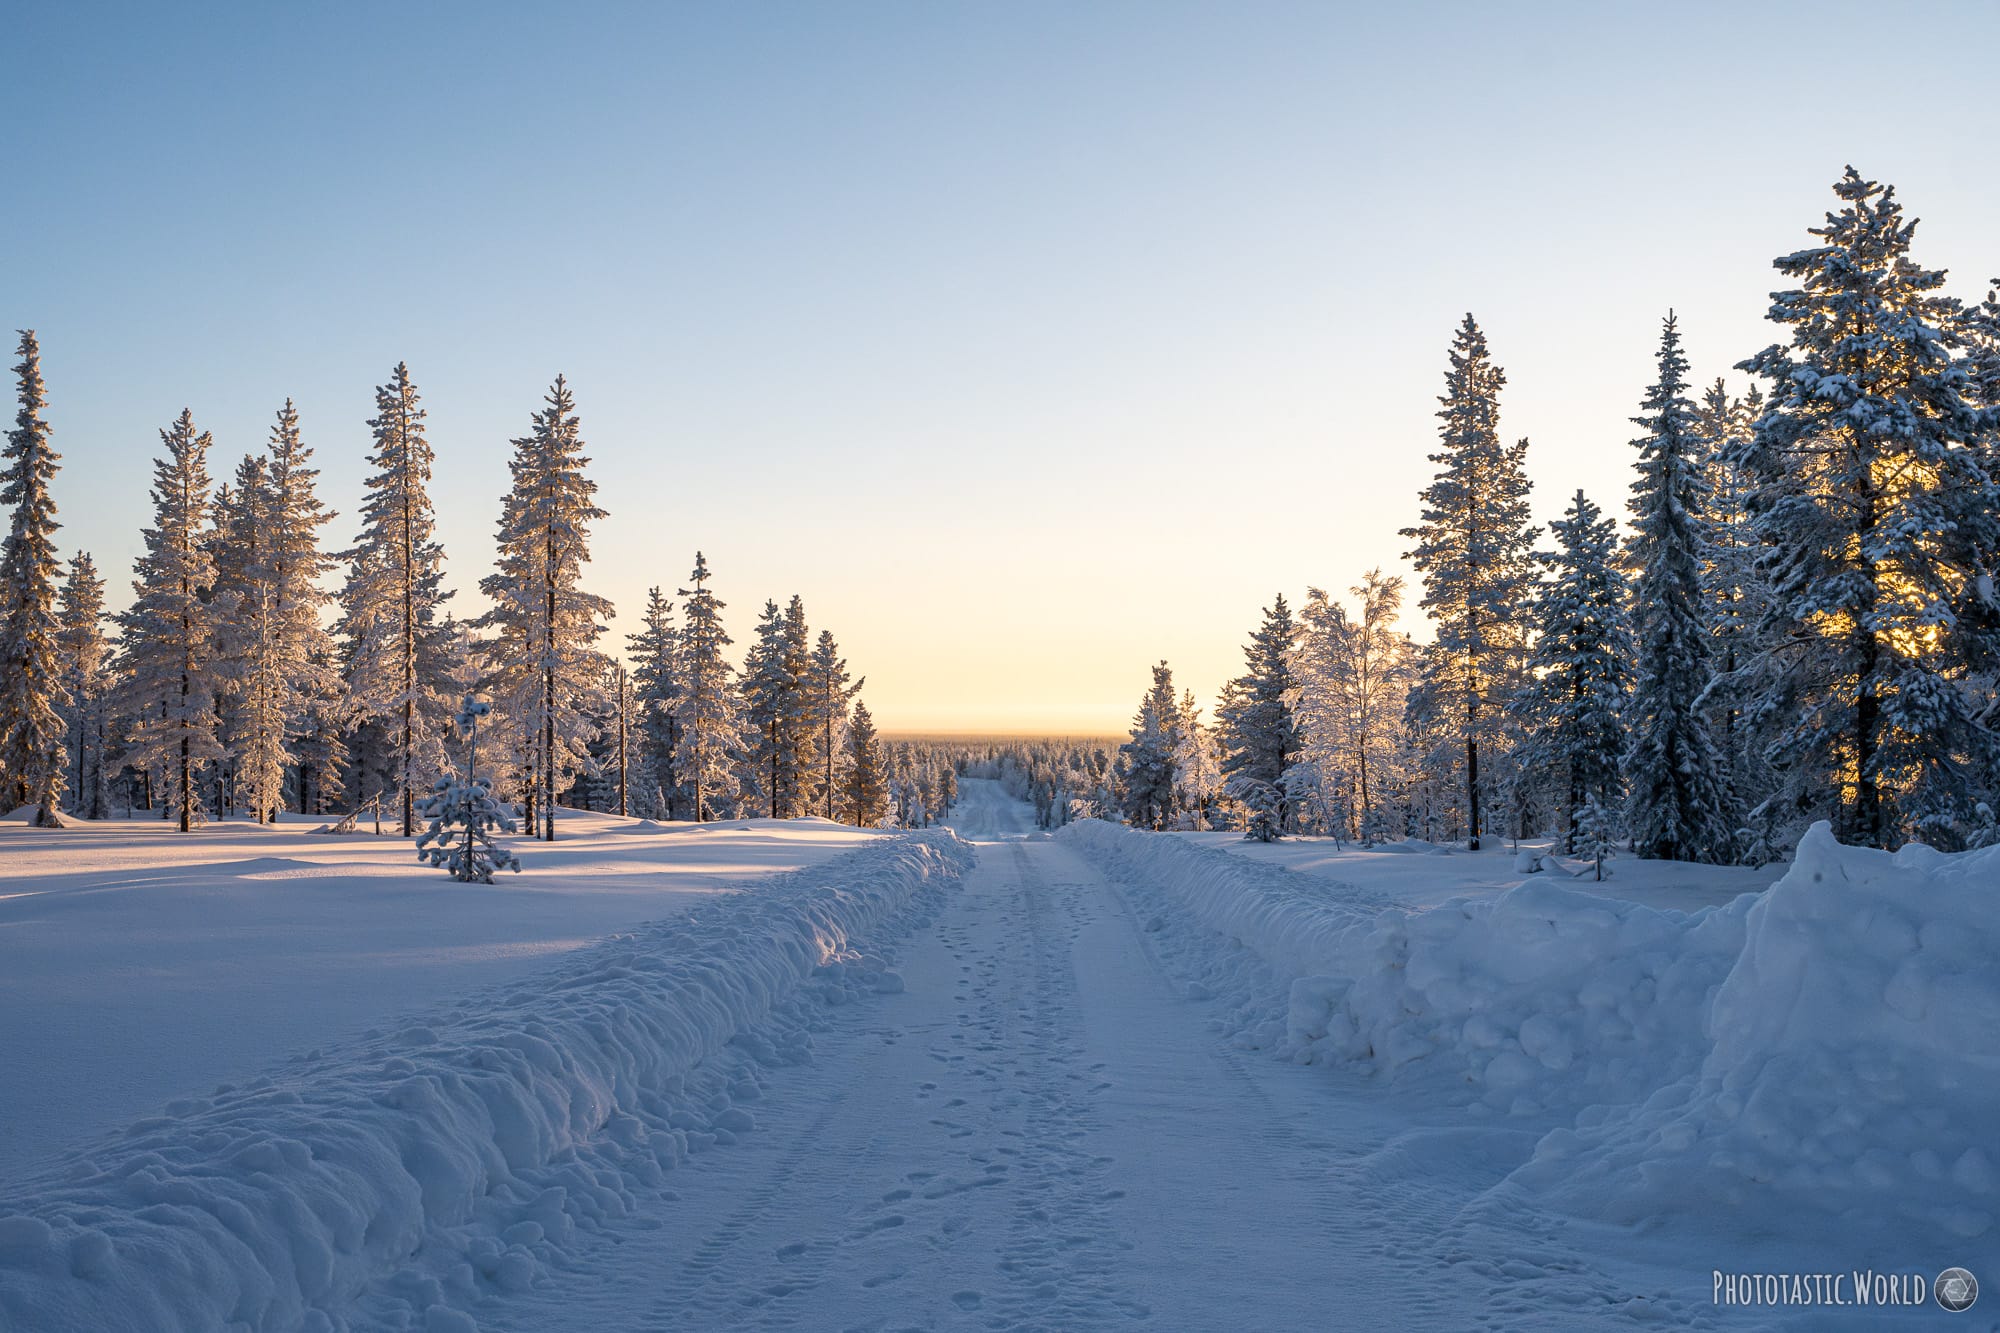 Driving Finnish Regional Road 955 from Sirkka to Inari